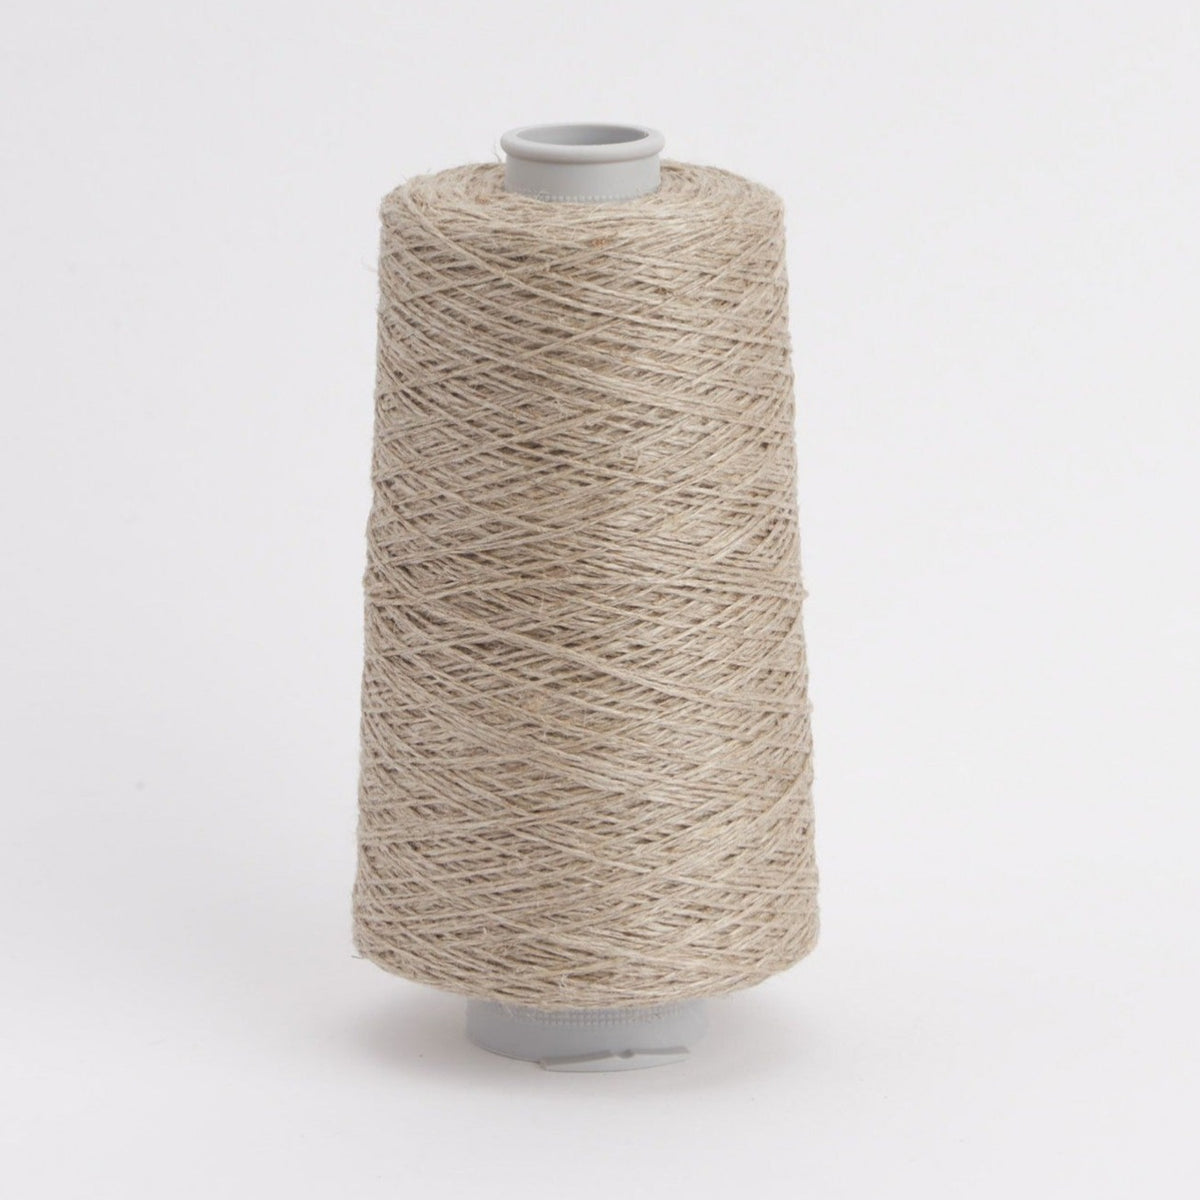 Venne Dry Spun Linen Nm 16/2 - 100g - Thread Collective Australia